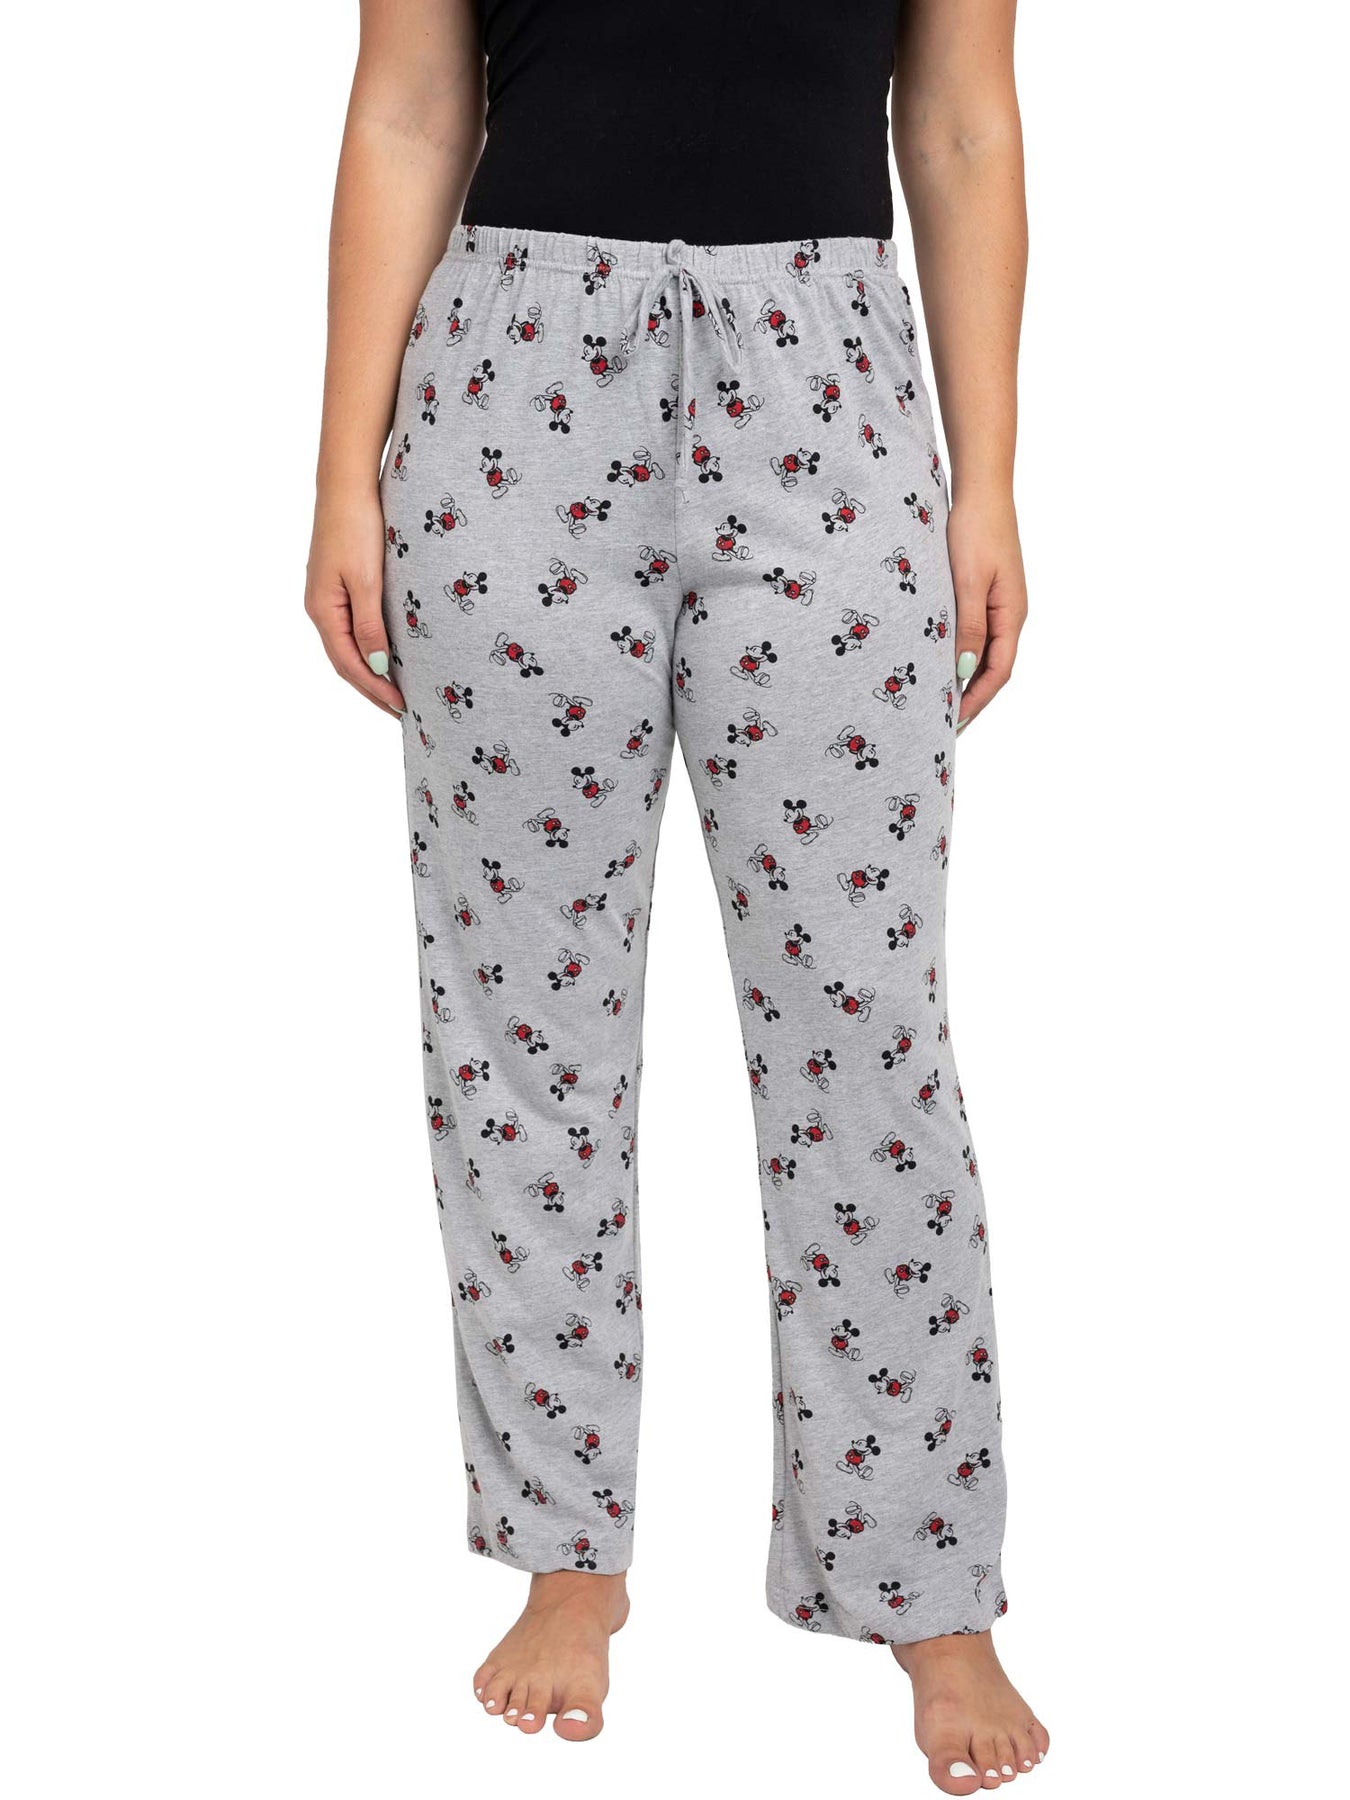 National Lampoon's Christmas Vacation Men's Allover Print Pajama